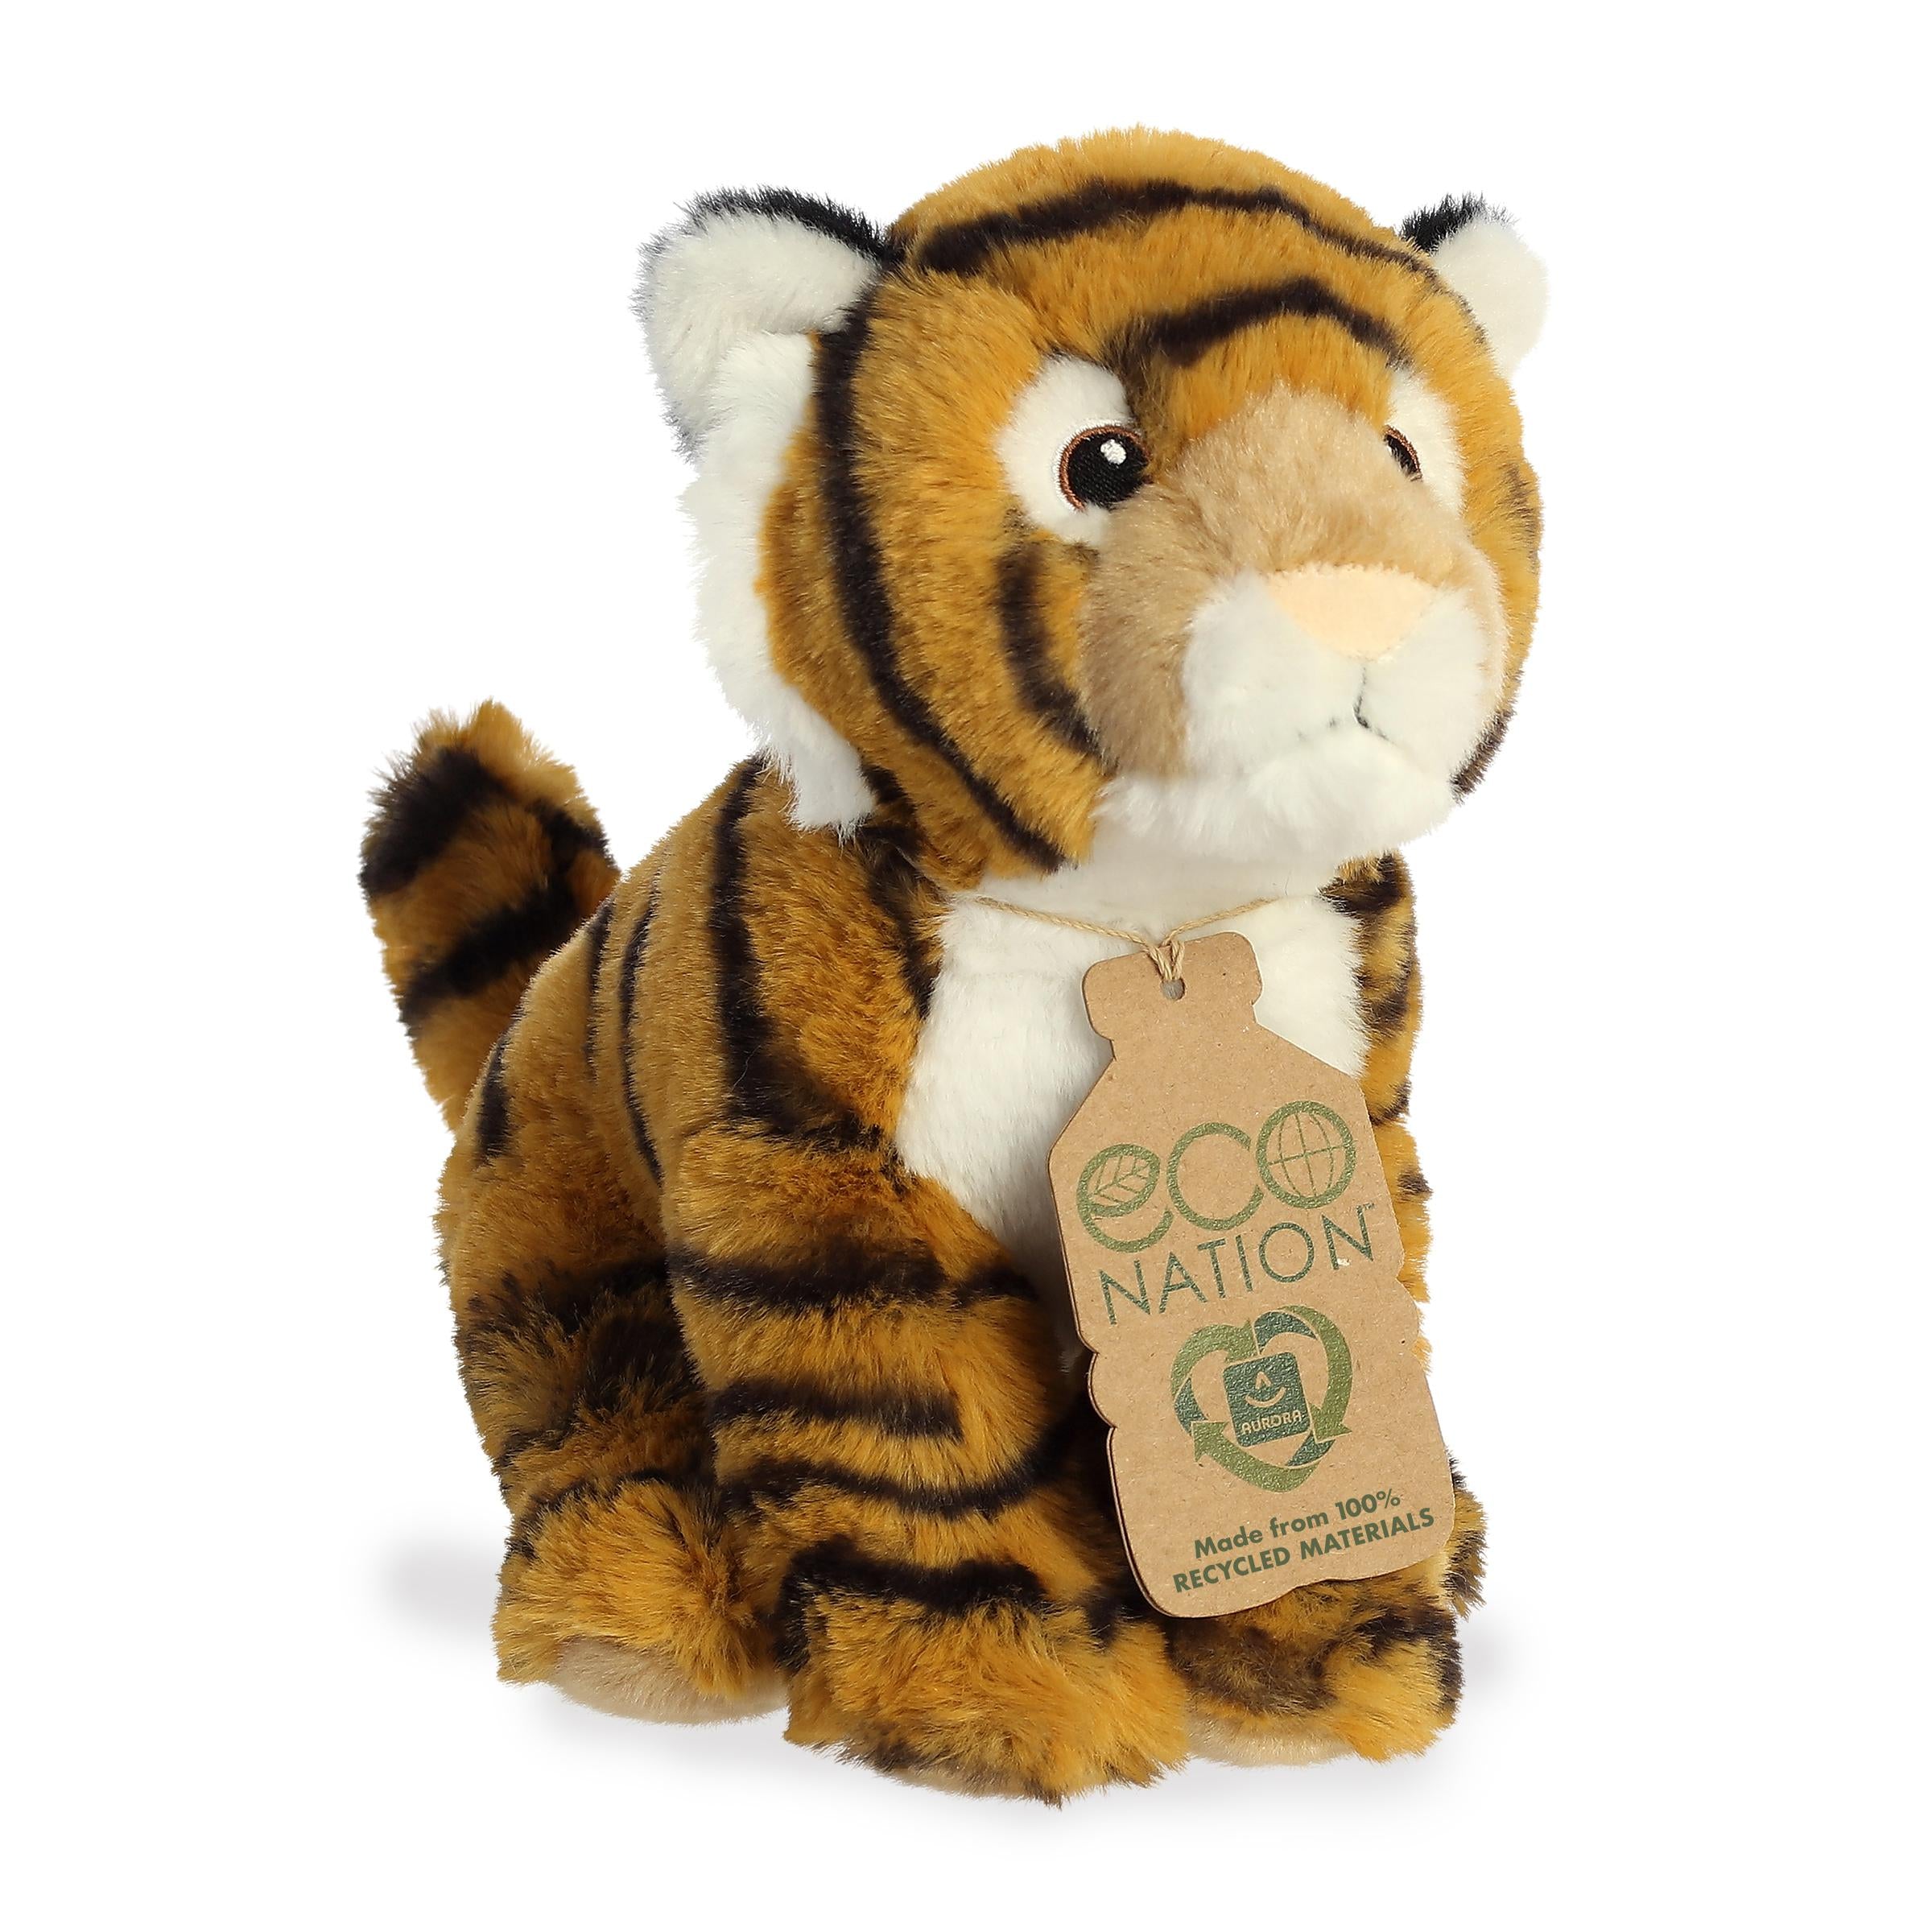 Aurora® - Eco Nation™ - 9" Bengal Tiger